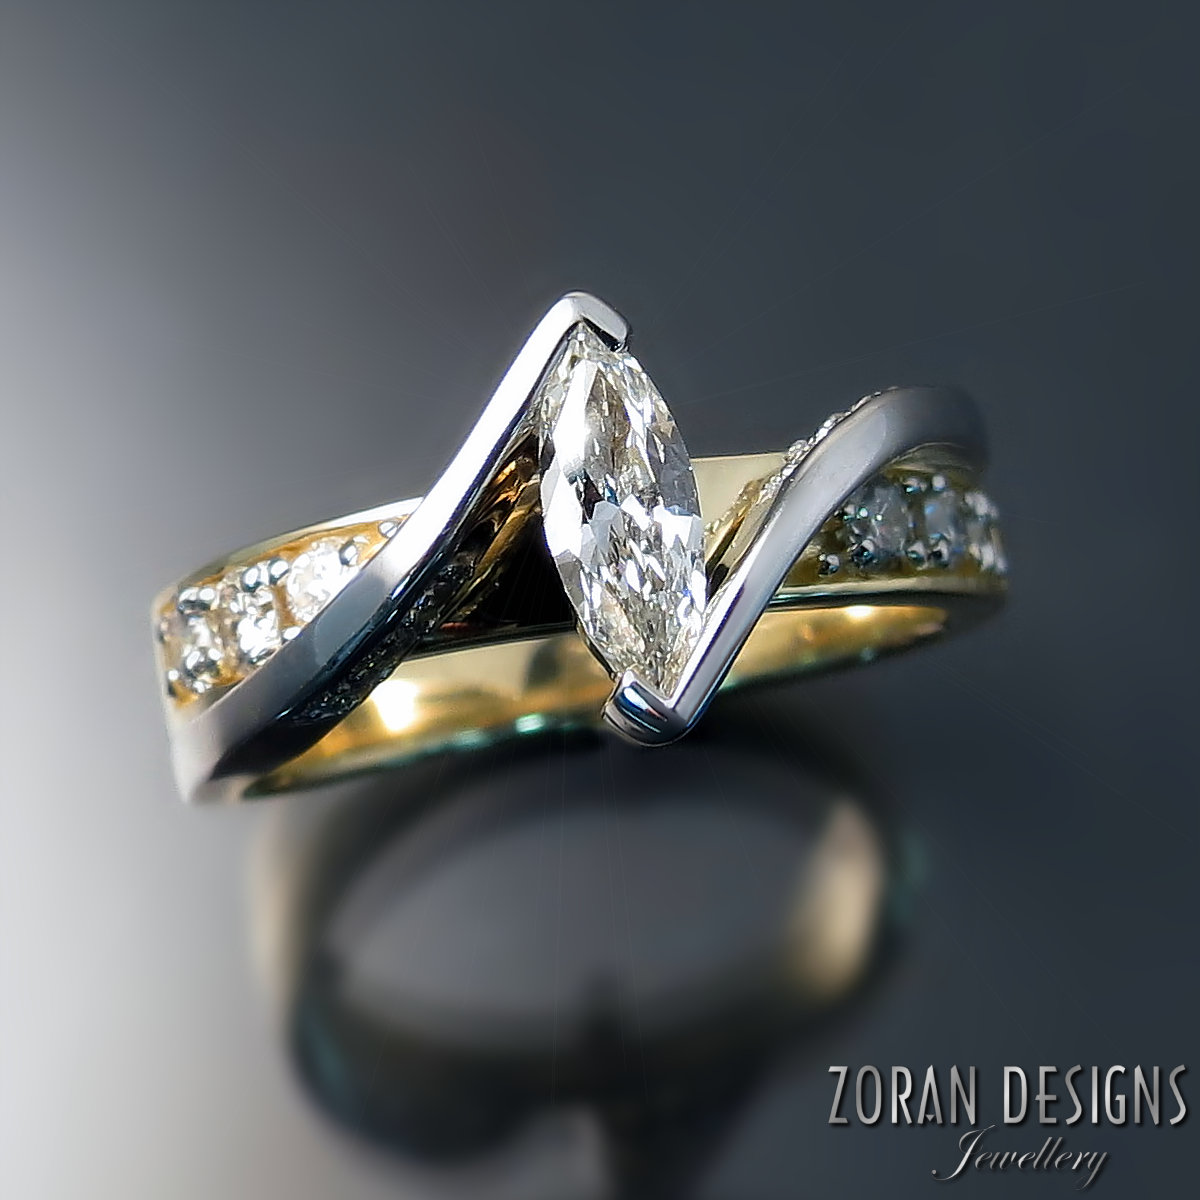 How a top Toronto jeweller designs elaborate custom engagement rings